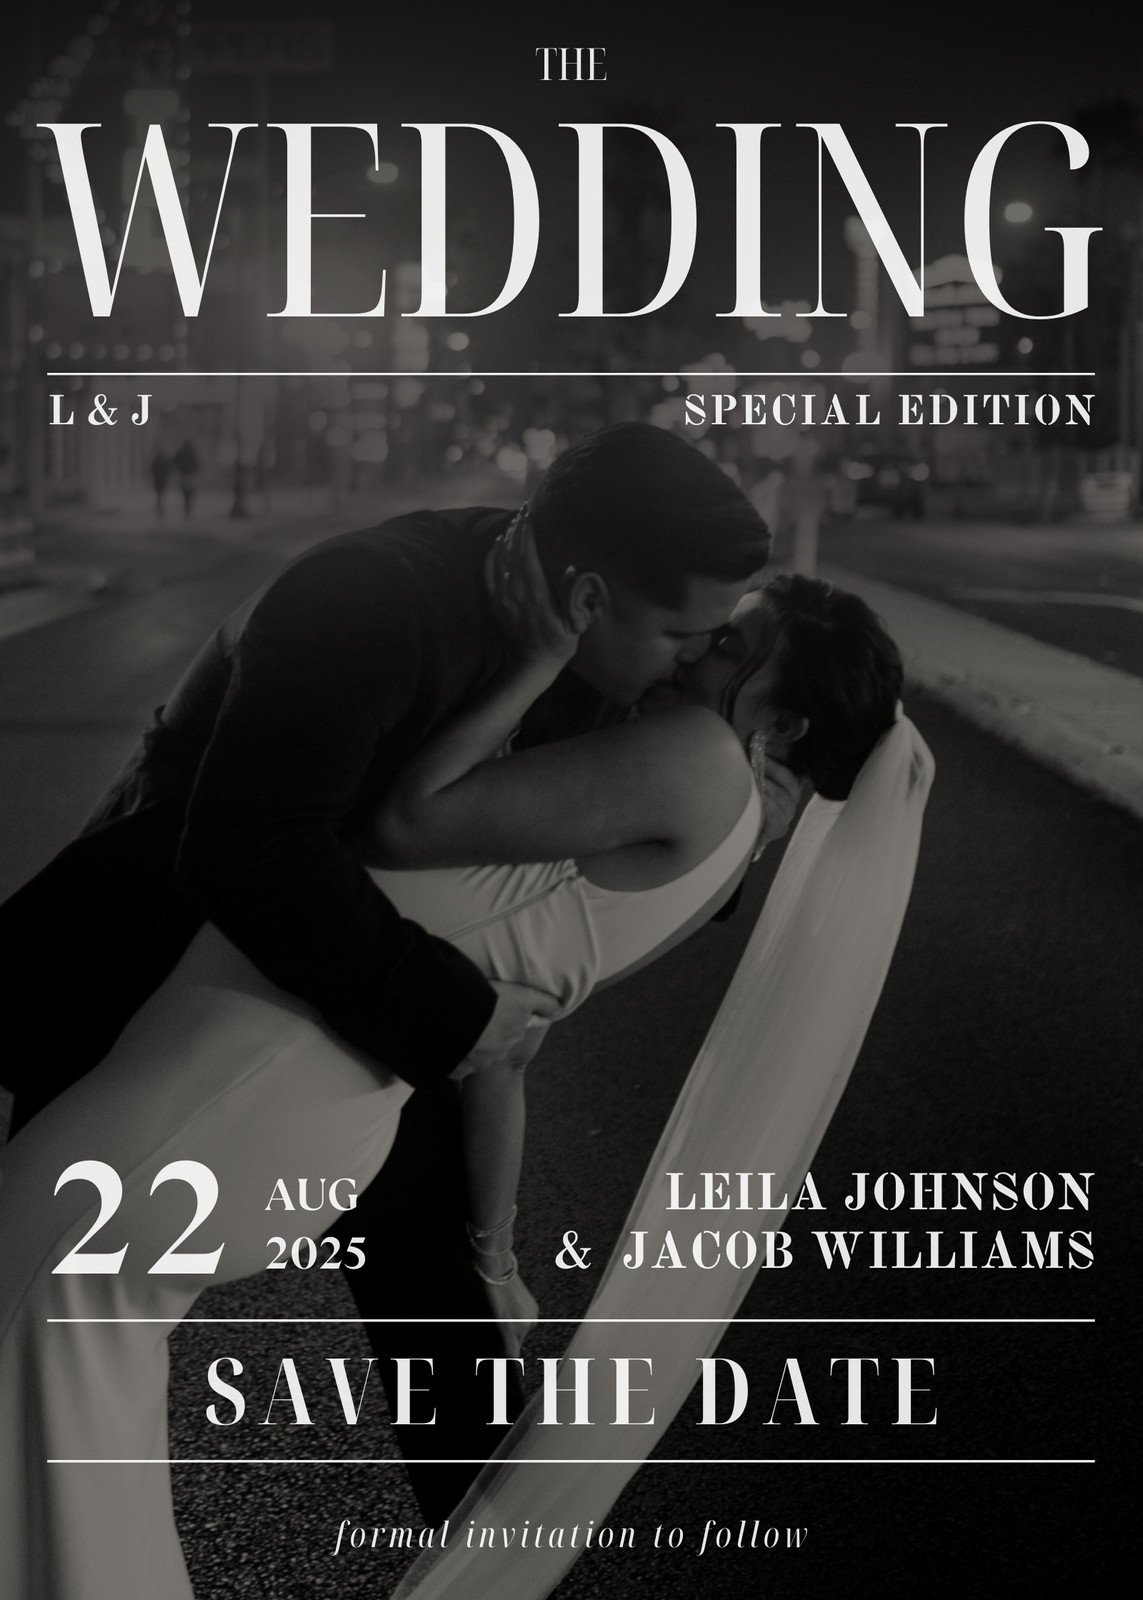 Wedding invitations made easy - Magazine